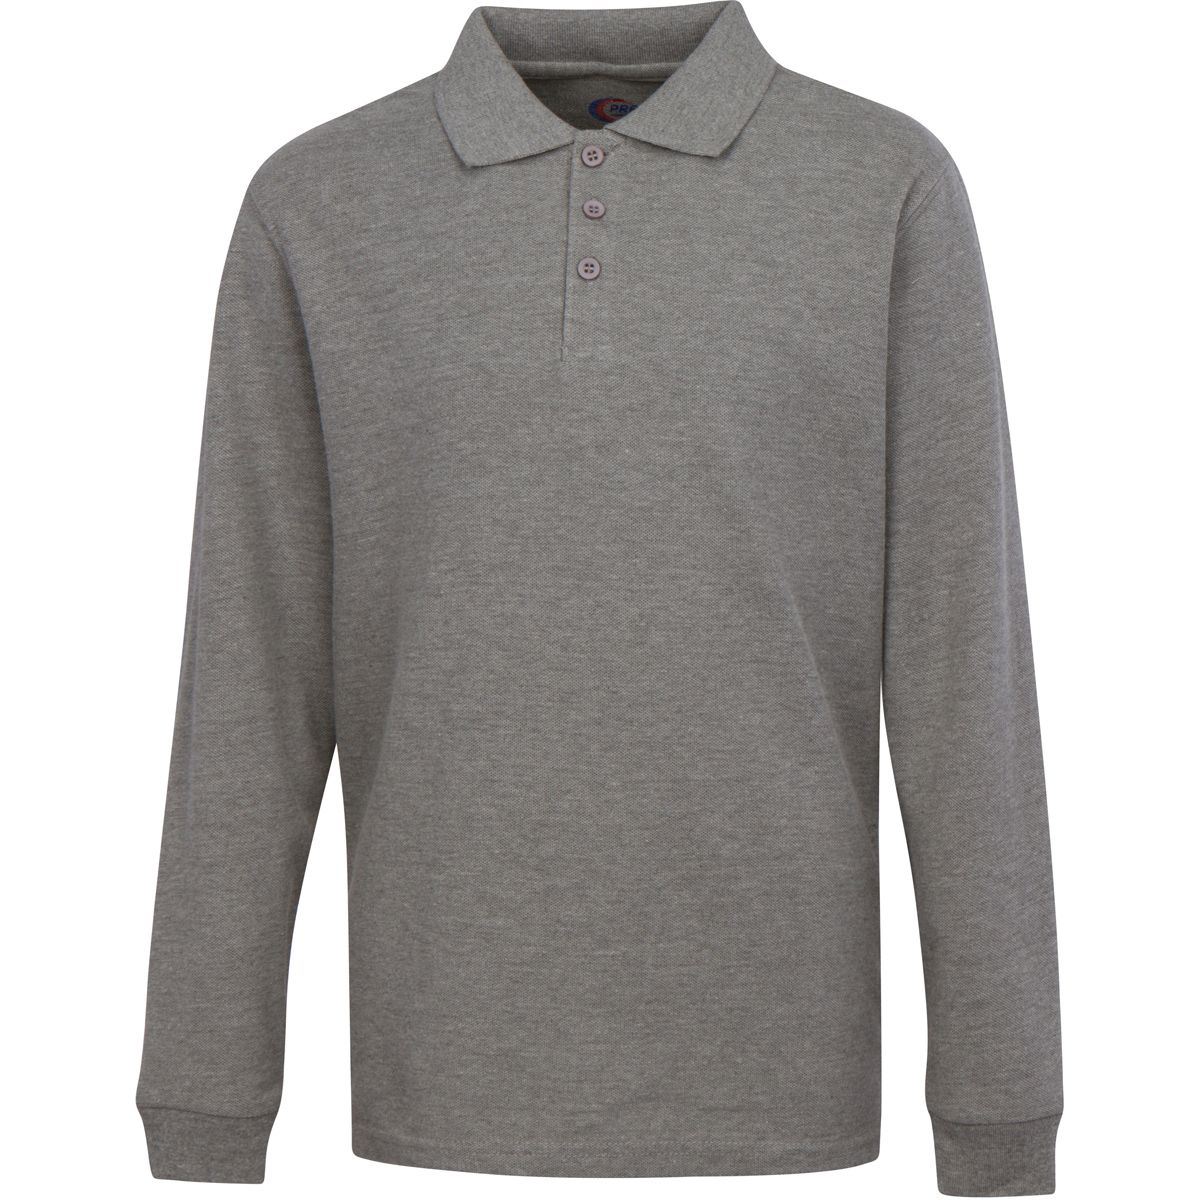 Boy's School UNIFORM Long-Sleeve Shirts - Heathered Grey - Choose Your Sizes (3/4-18/20)